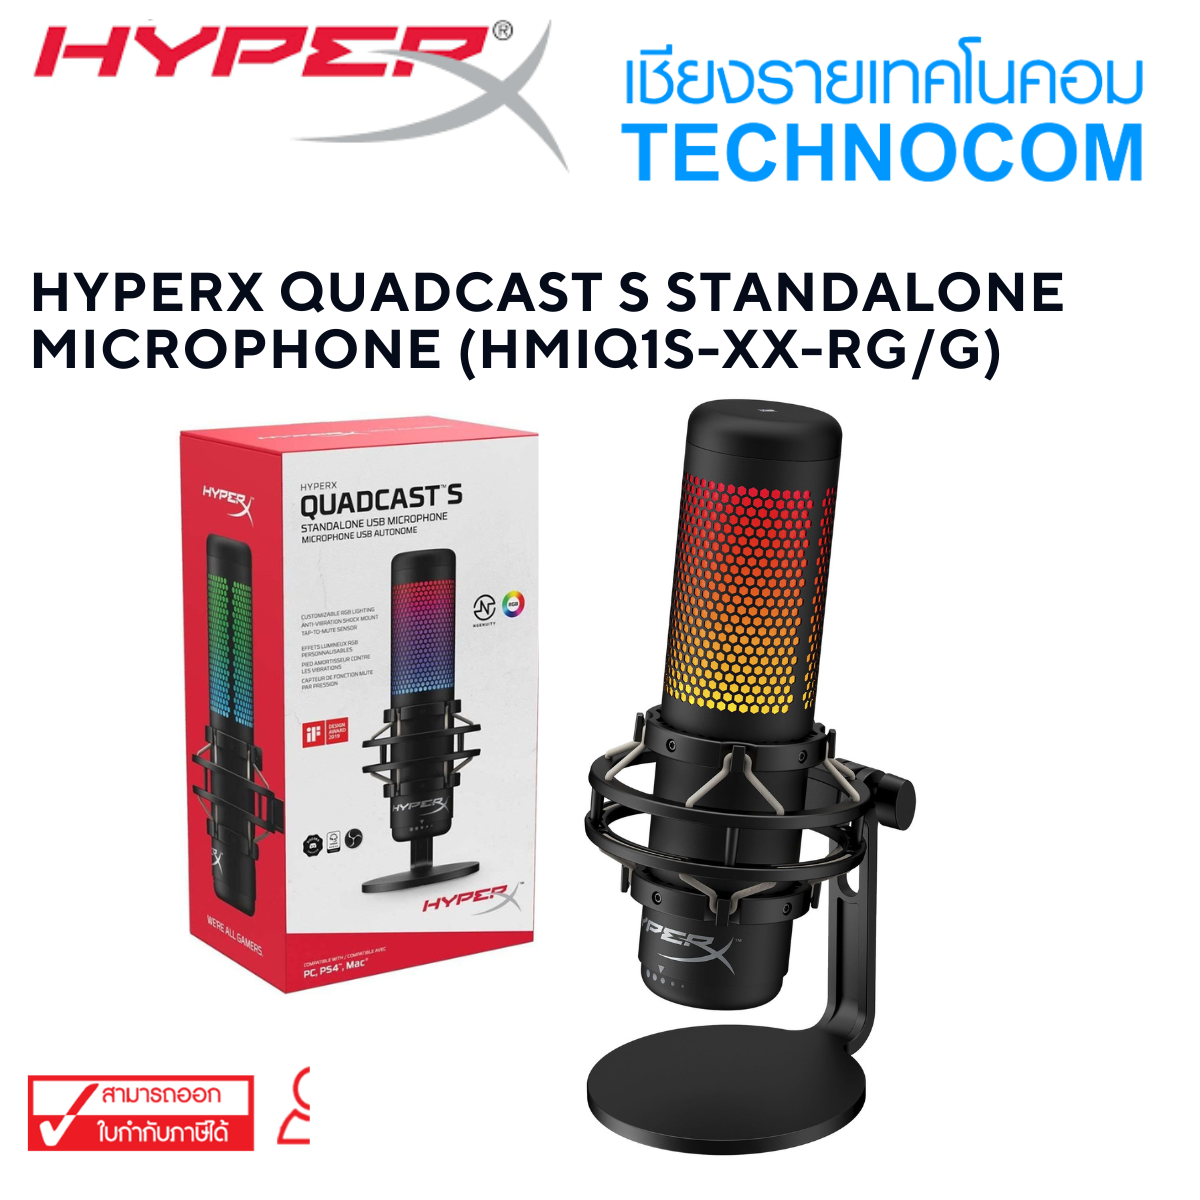 HYPERX QUADCAST S STANDALONE MICROPHONE (HMIQ1S-XX-RG/G)